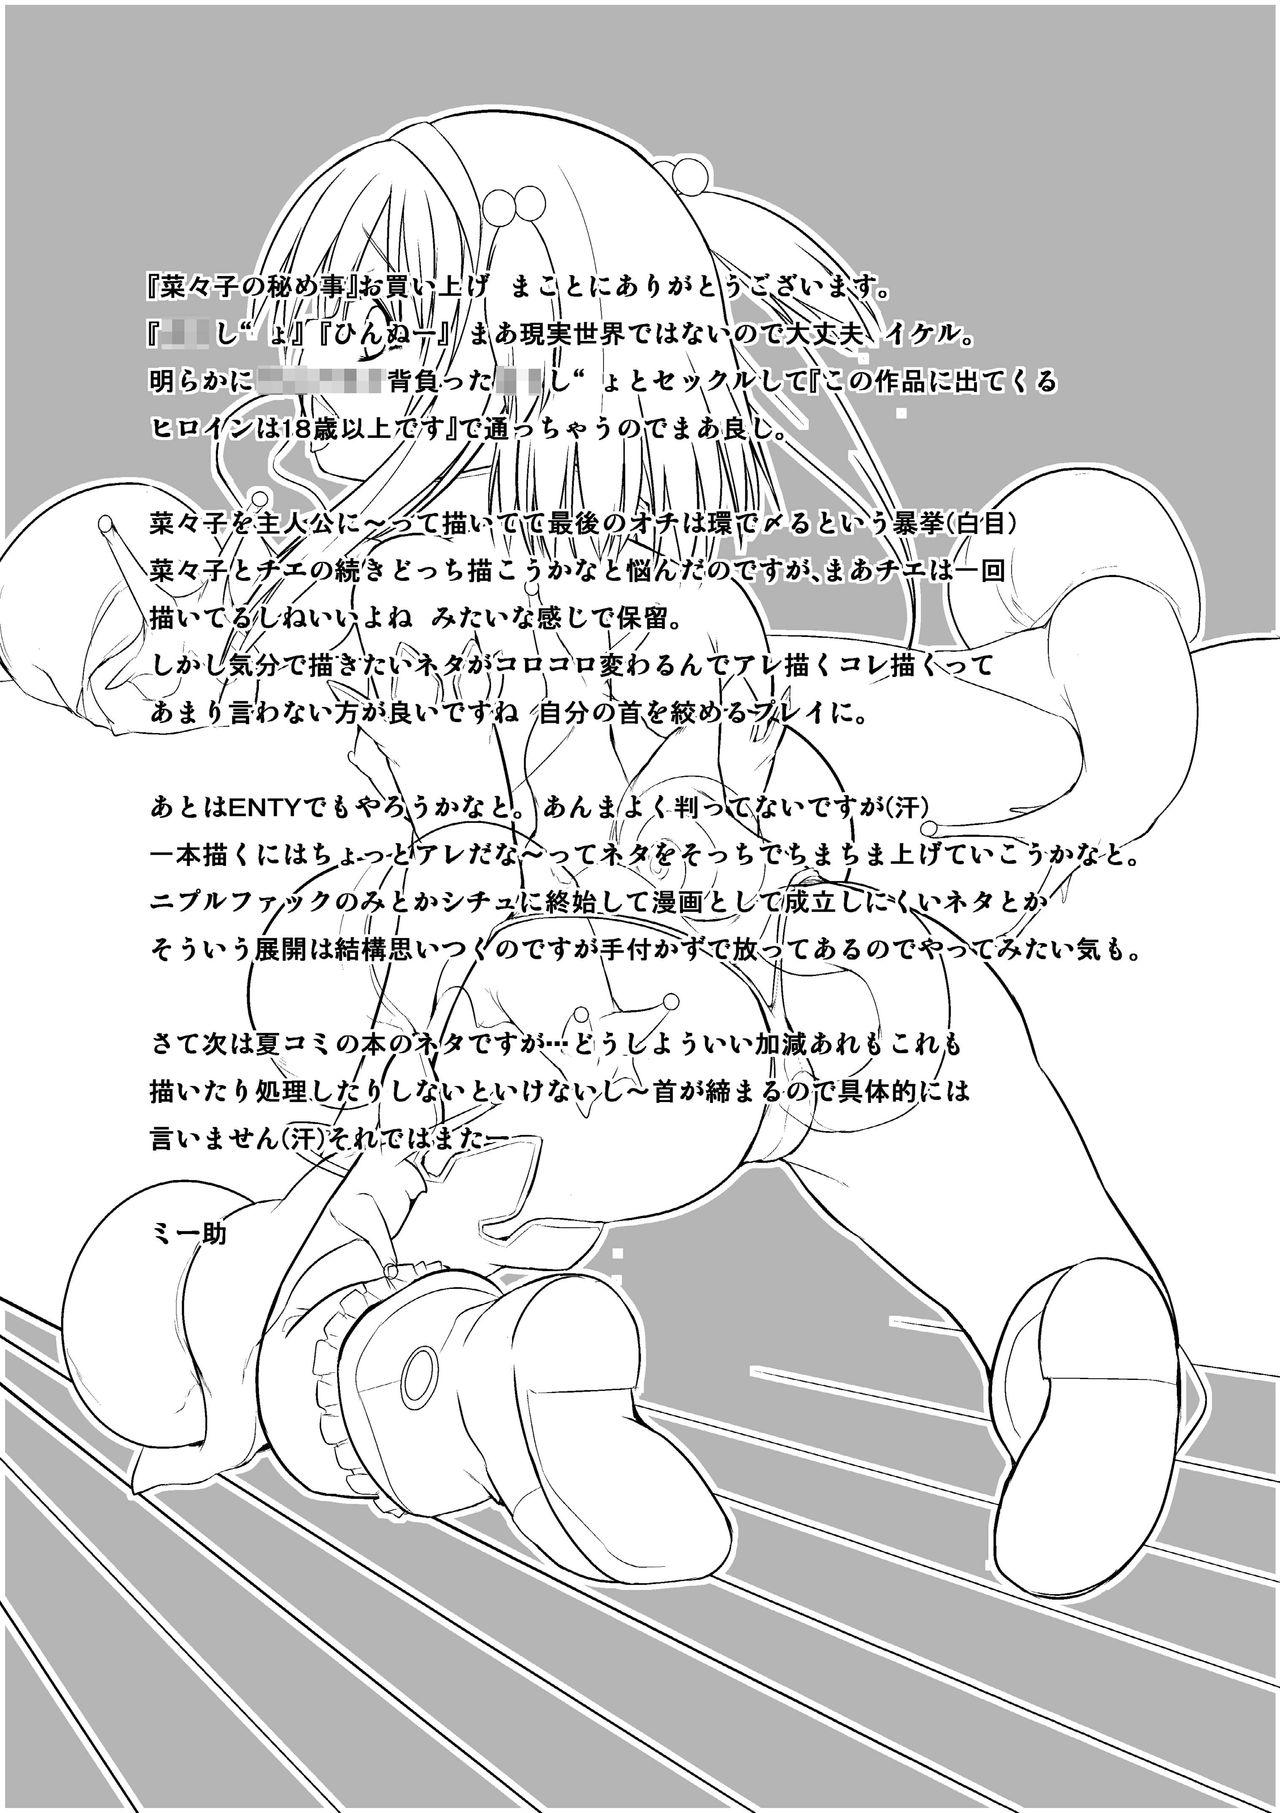 Escort Dungeon Travelers - Nanako no Himegoto - Toheart2 Daring - Page 29